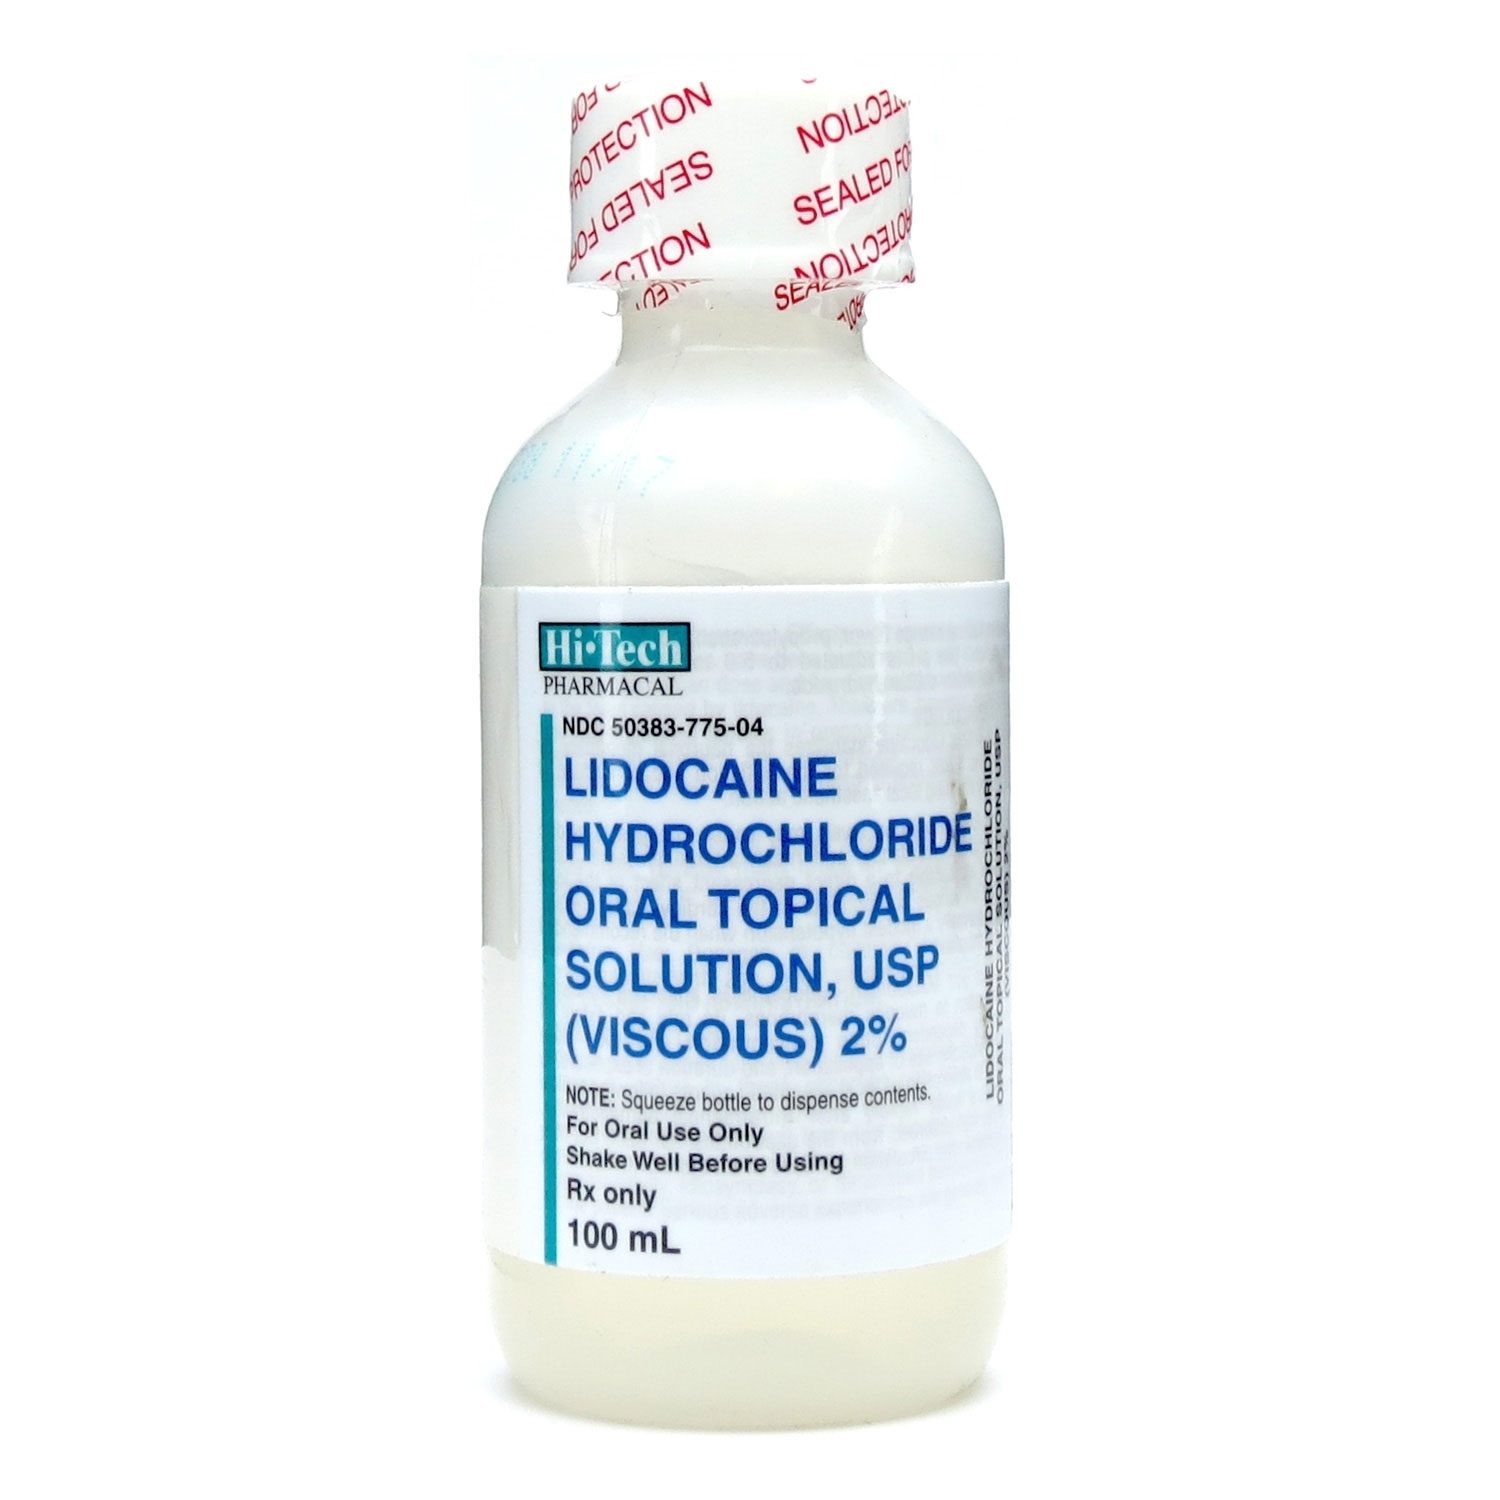 Lidocaine, (Lidocaine Hydrochloride Oral Topical Solution USP), 2%